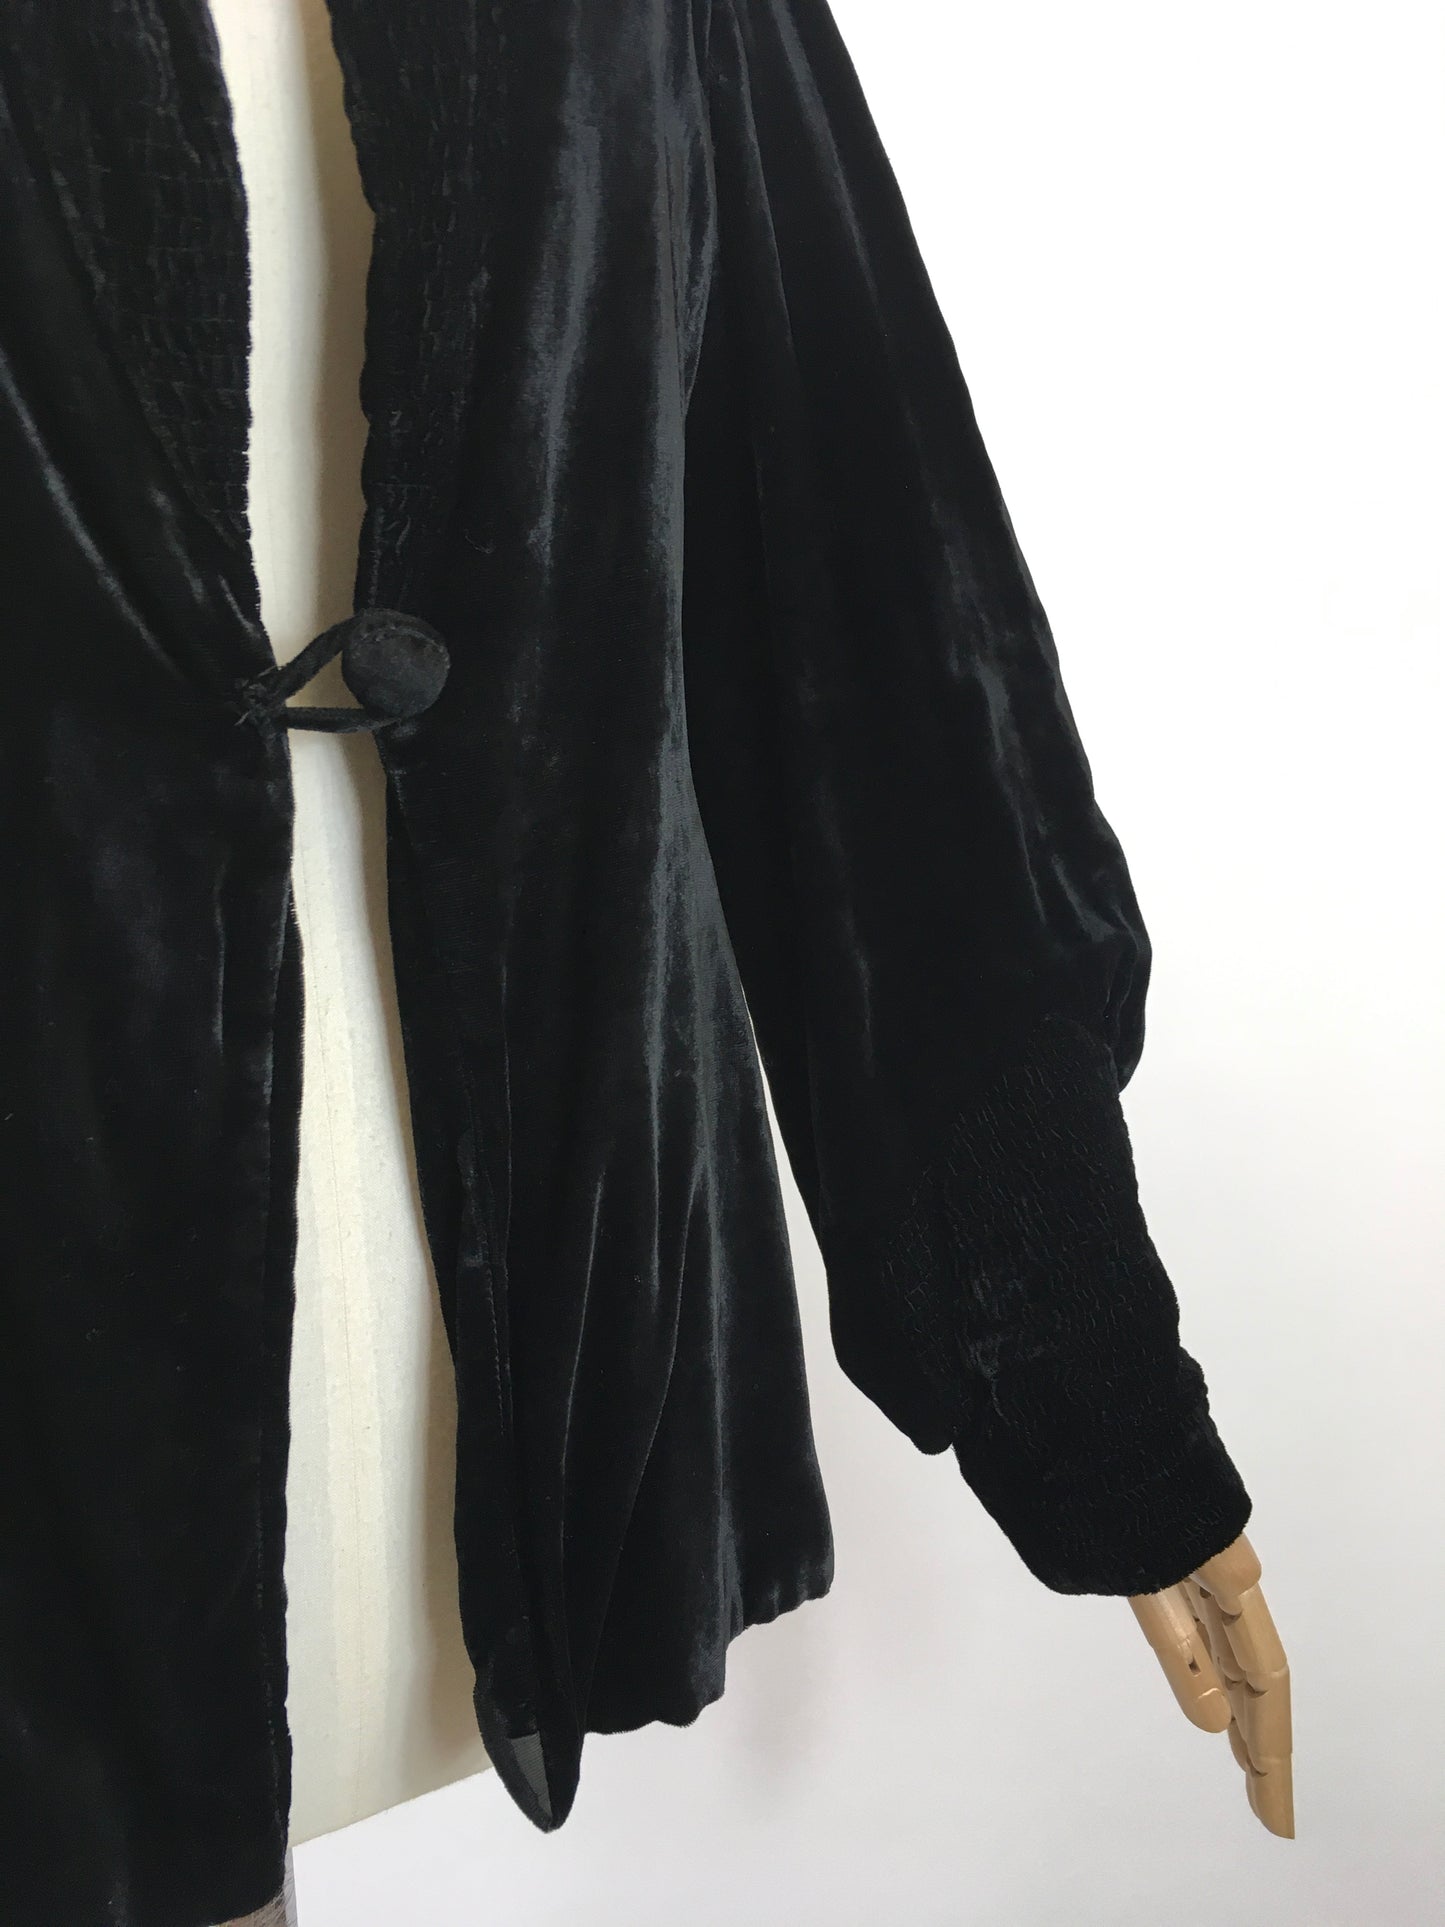 Original 1920's / 1930's Exquisite Evening Jacket - In Black Silk Velvet With Stunning Details